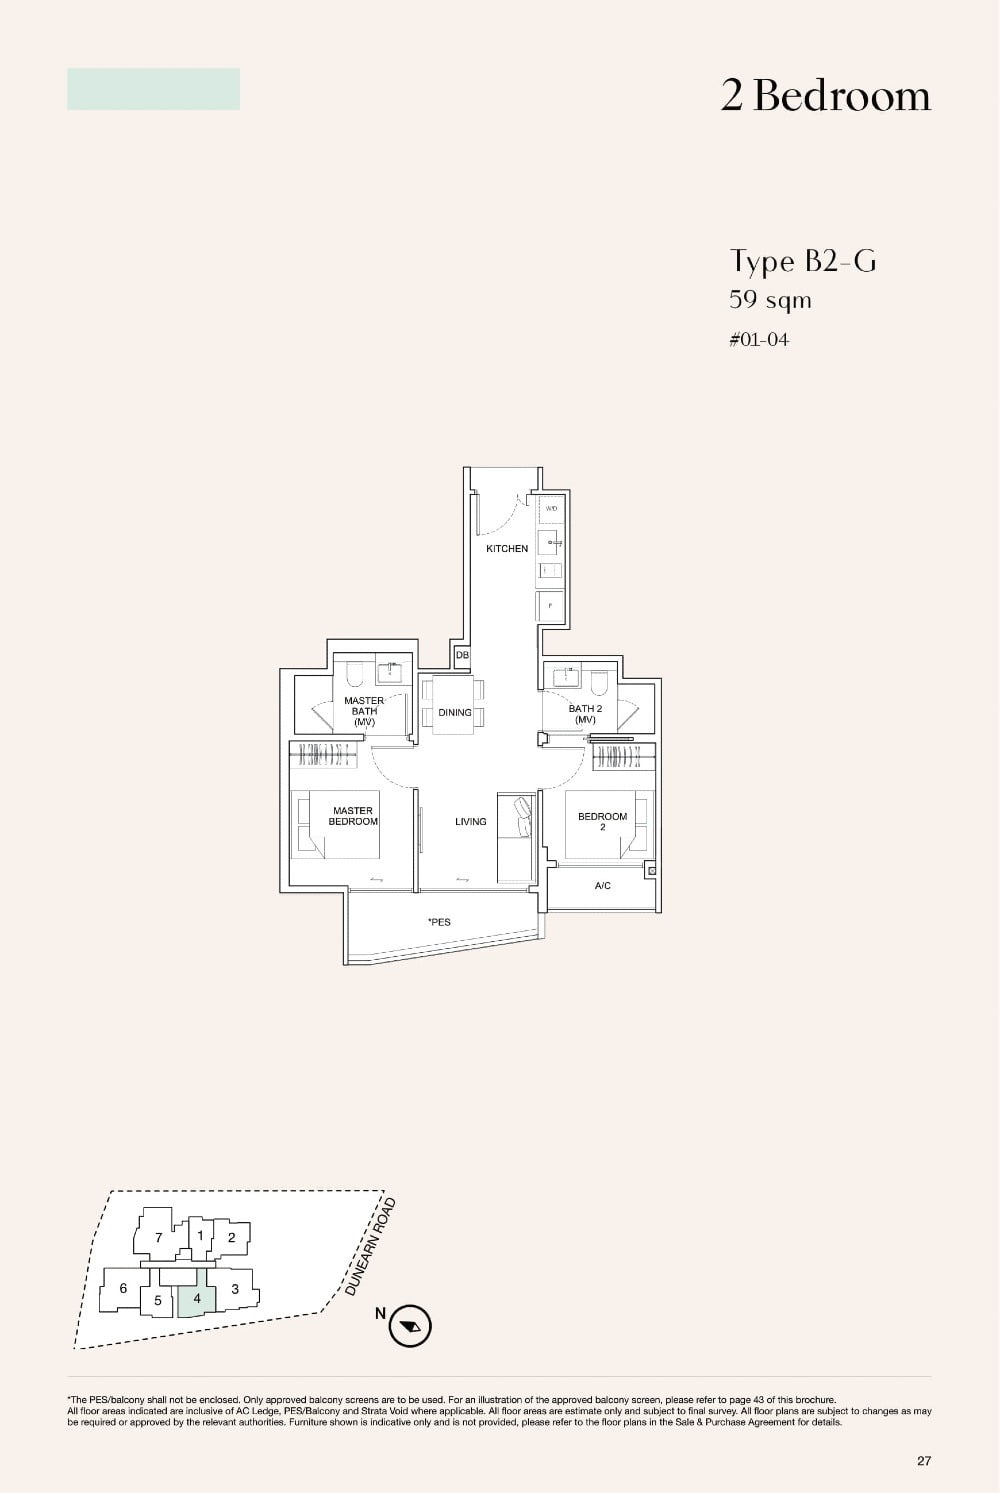 fp-dunearn-386-b2g-floor-plan.jpg